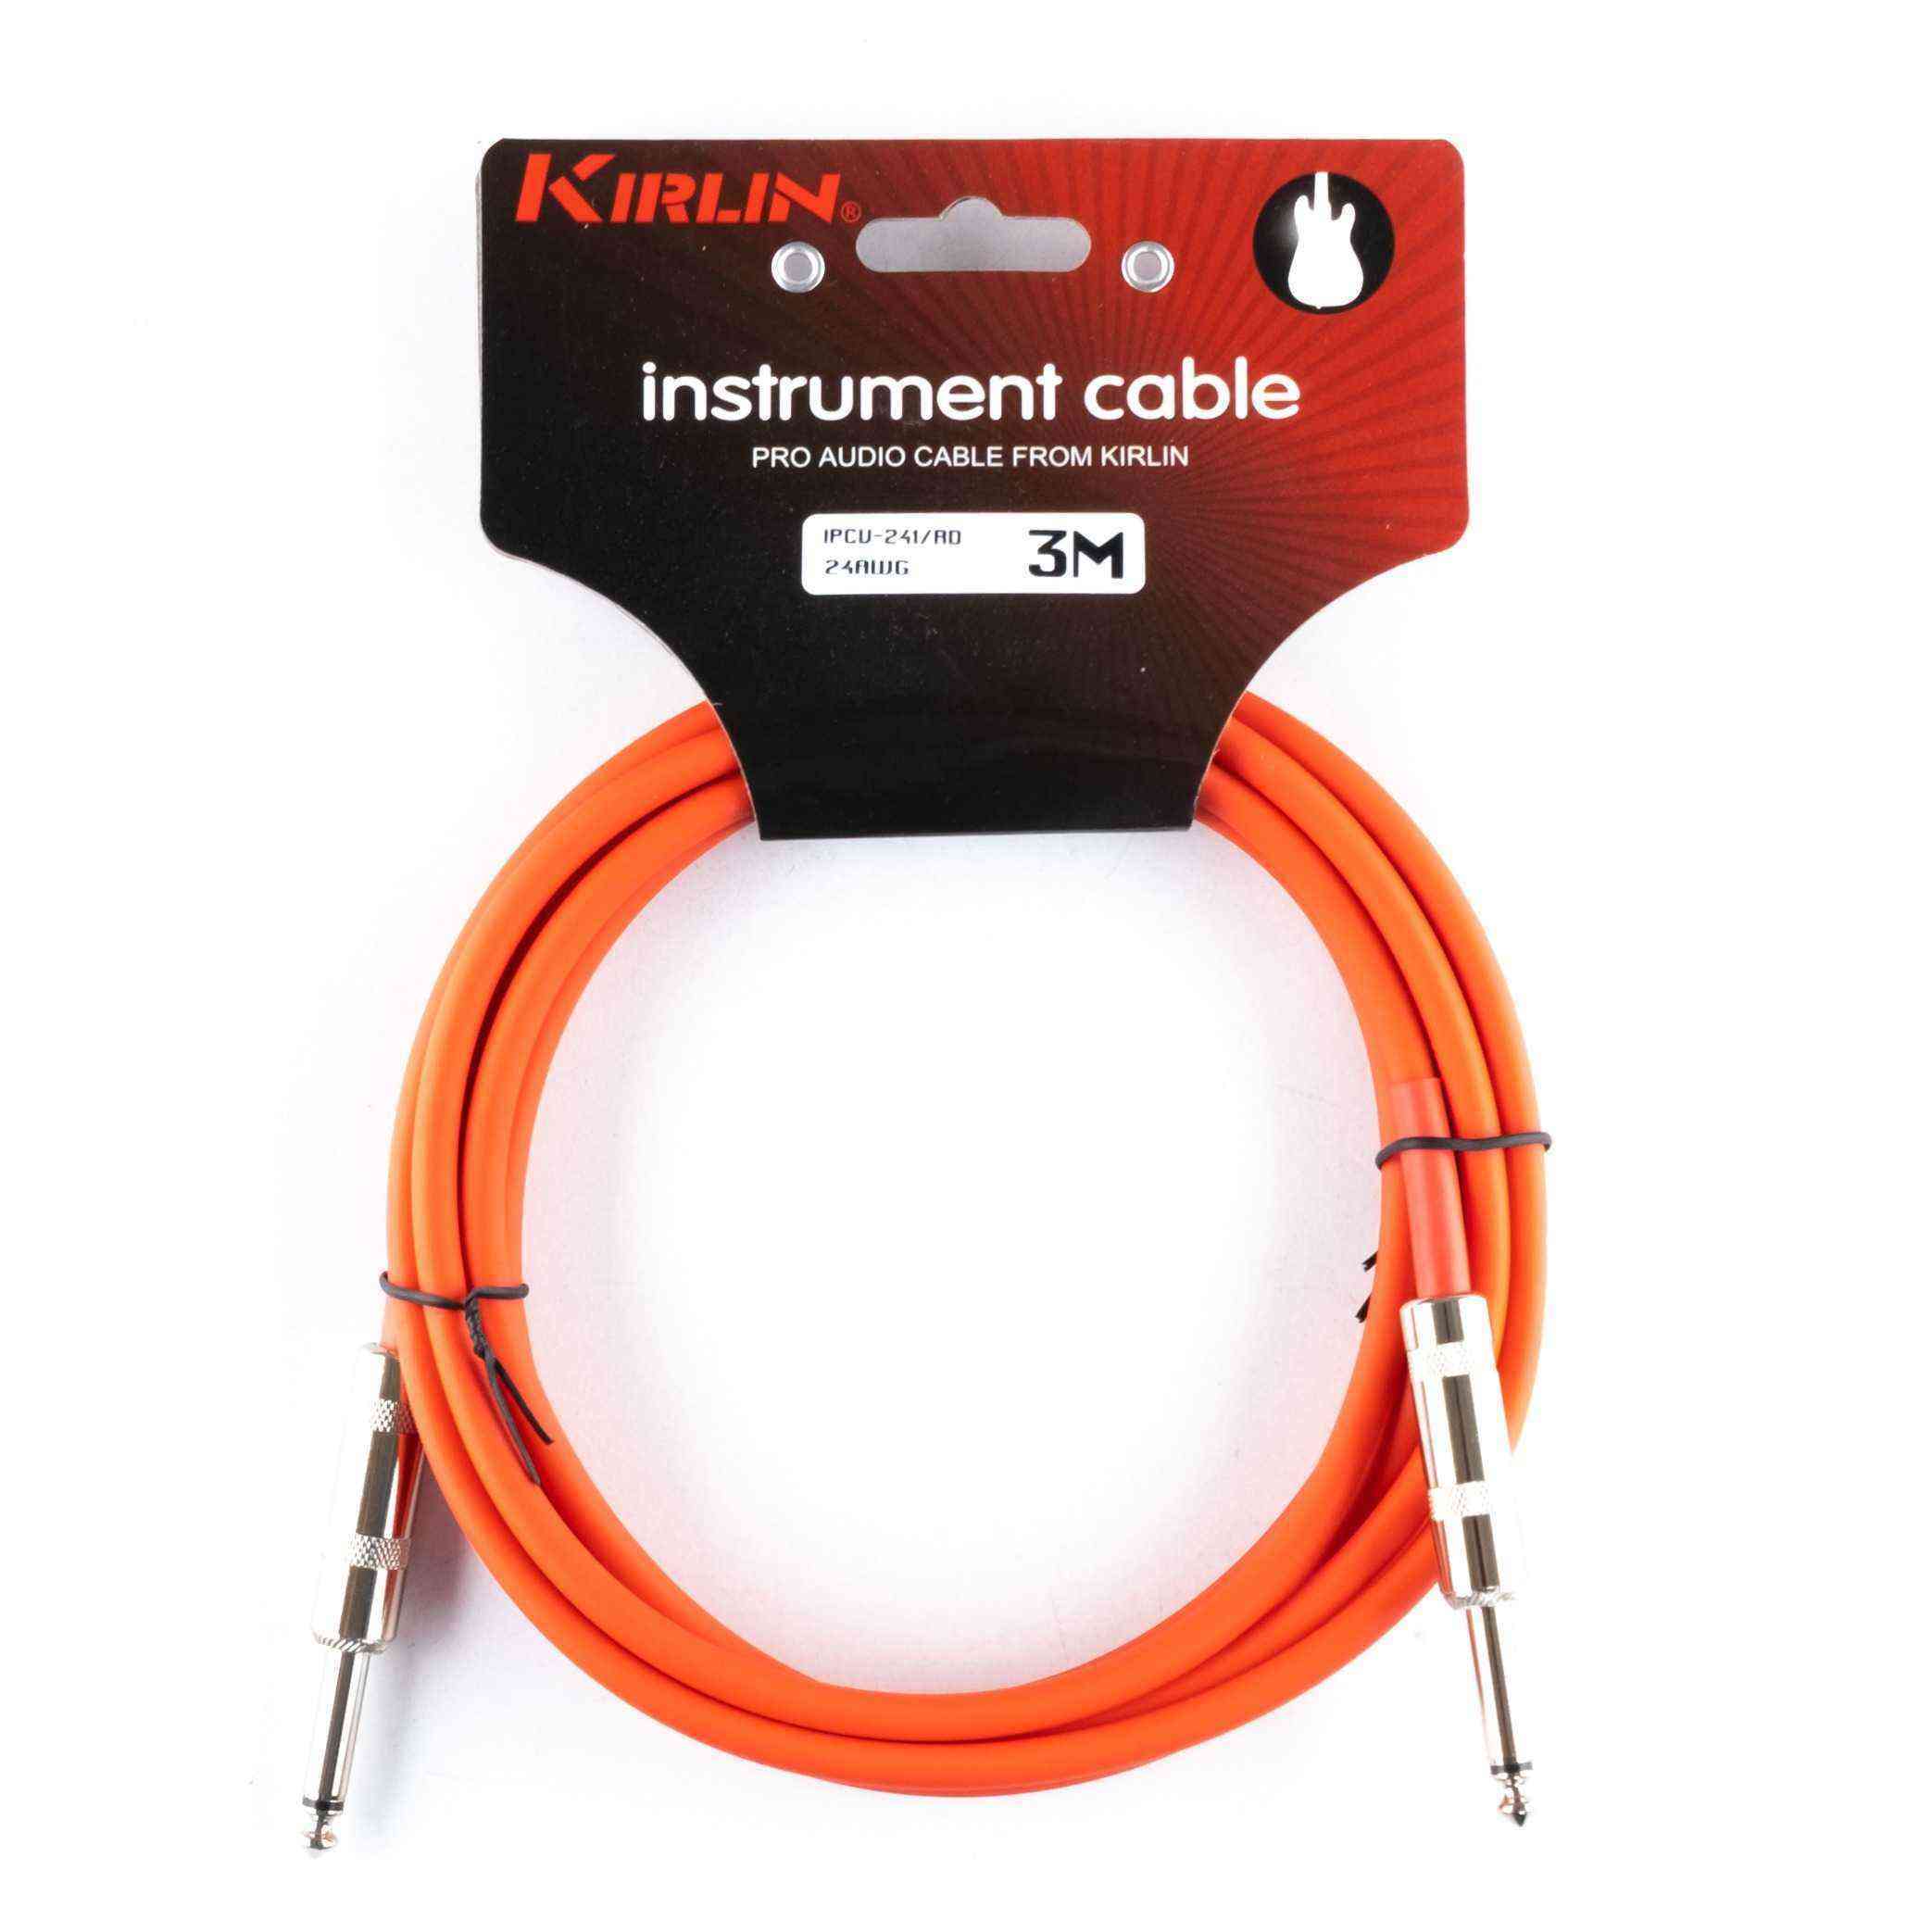 Kirlin Cable IPCV-241RD 3MT Enstruman Kablosu - Kırmızı